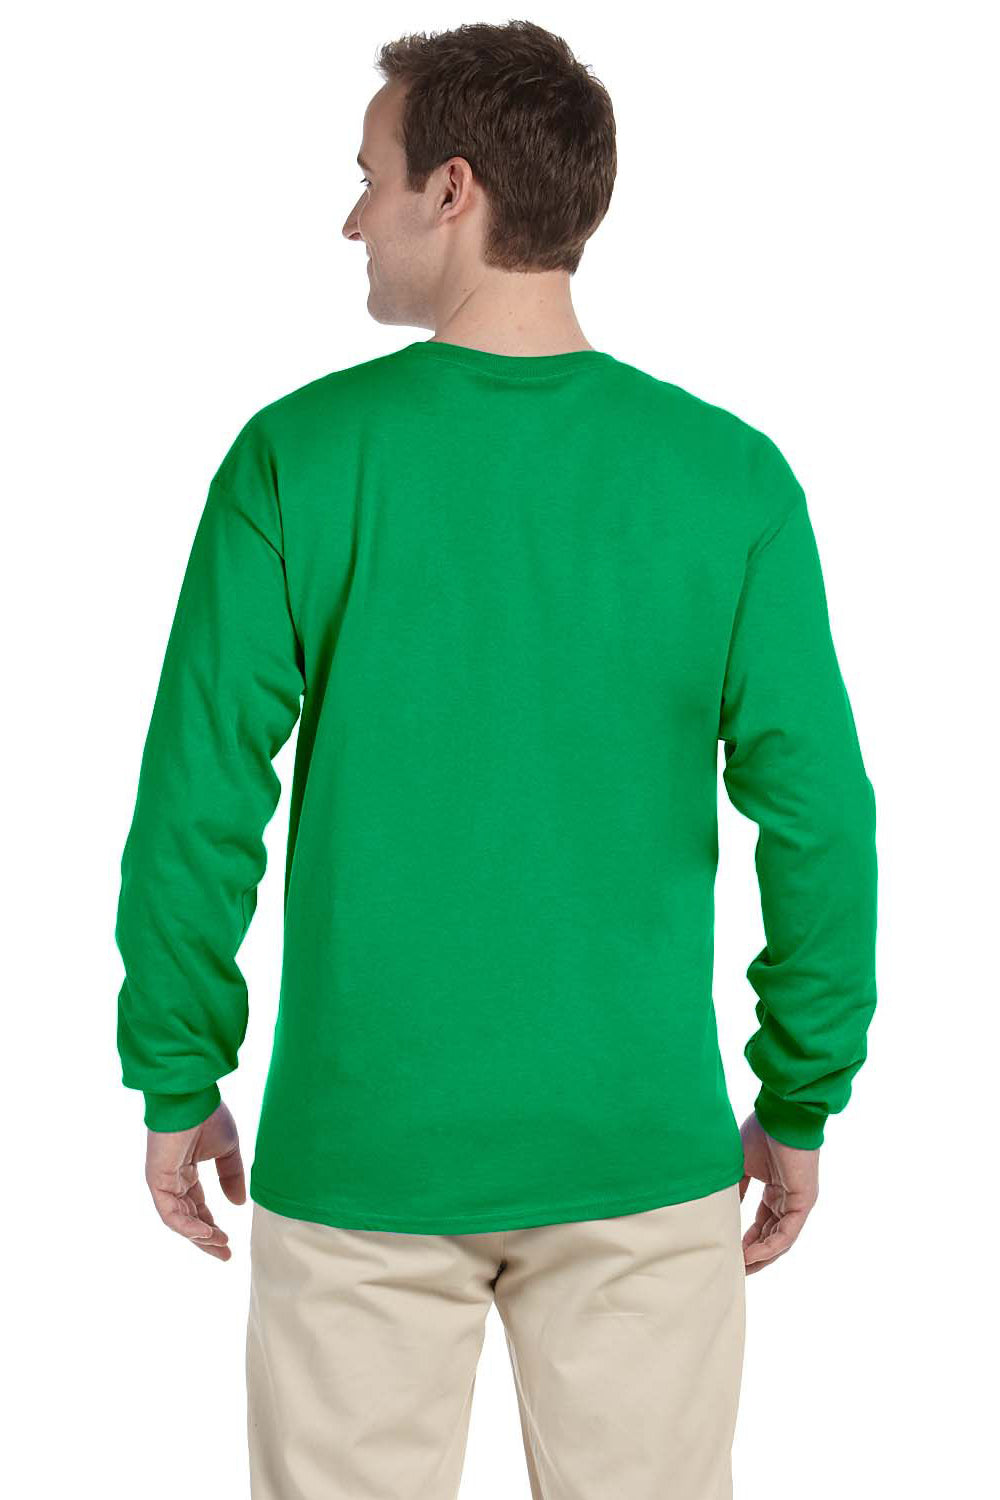 Fruit Of The Loom 4930 Mens HD Jersey Long Sleeve Crewneck T-Shirt Kelly Green Back